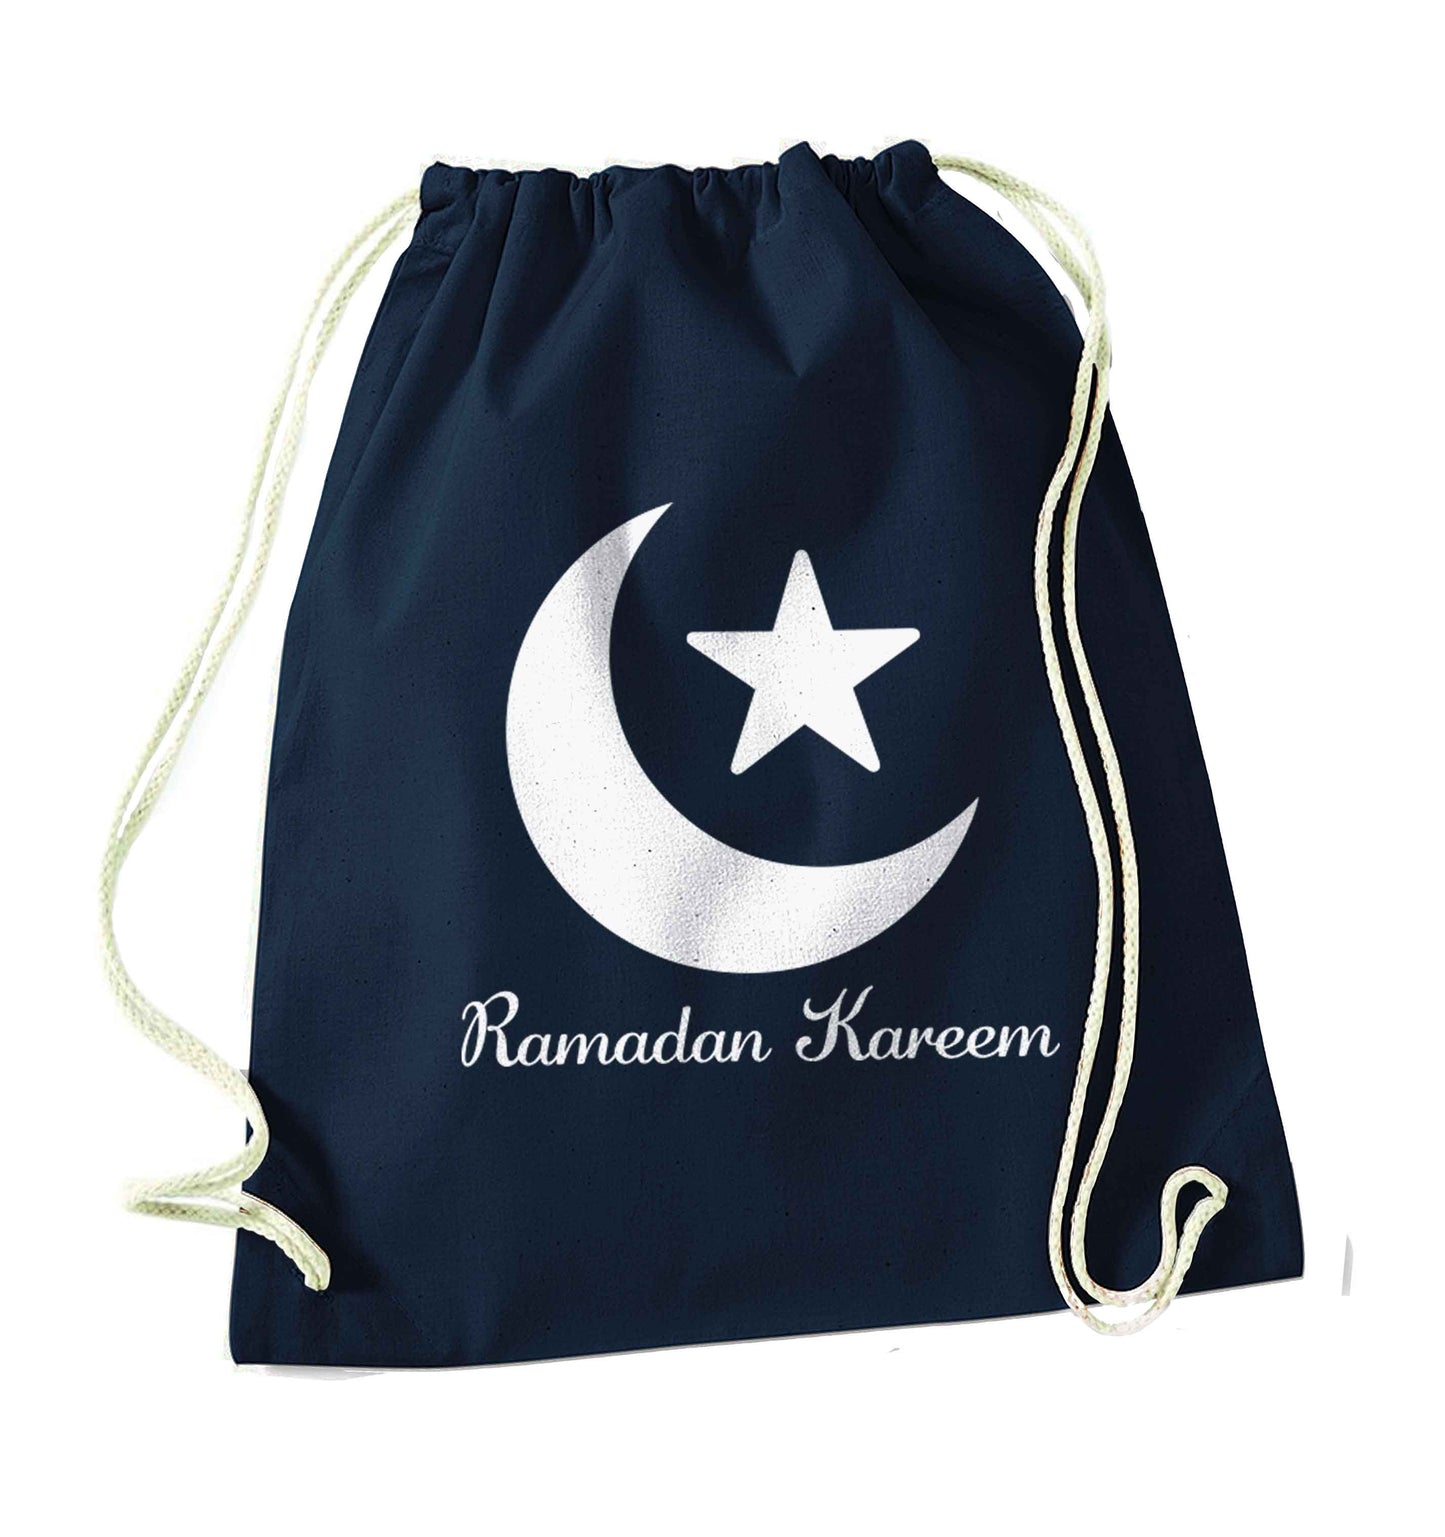 Ramadan kareem navy drawstring bag